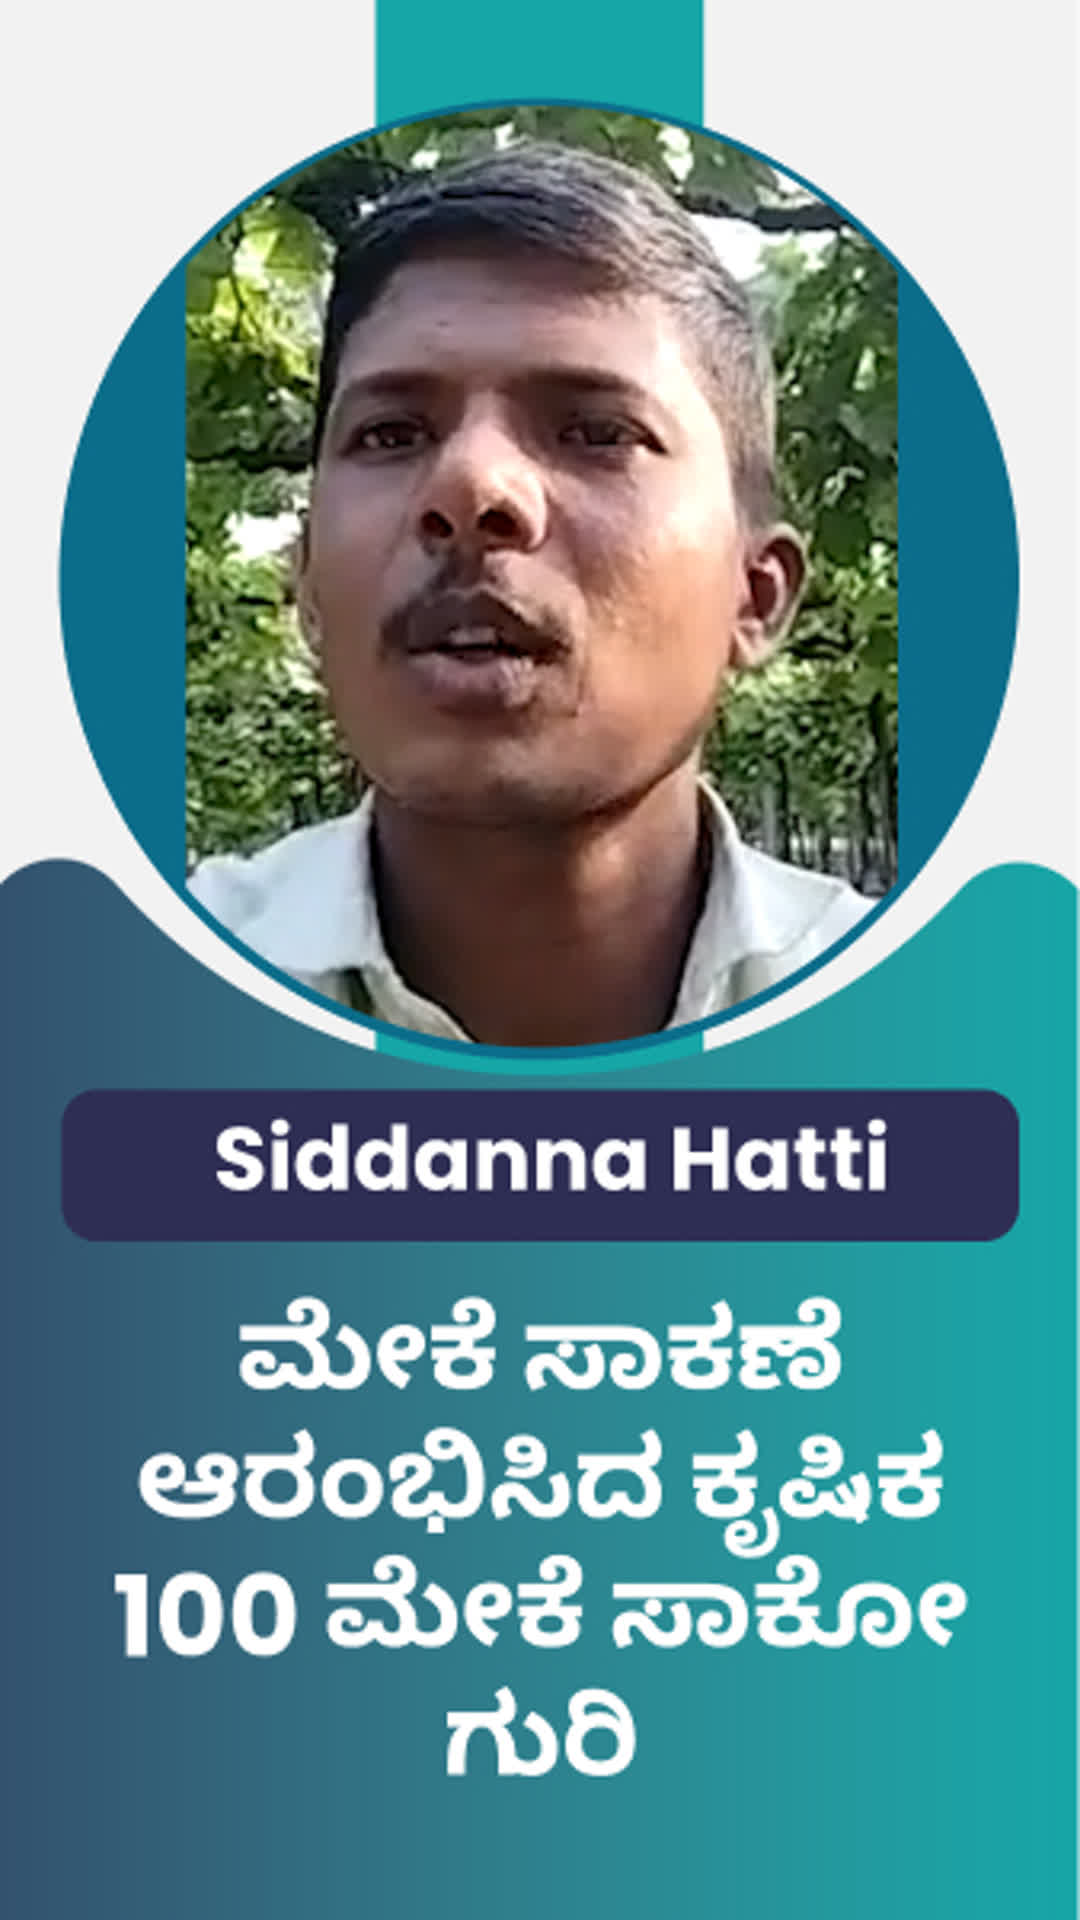 SIDDANNA DHONDAPPA HATTI's Honest Review of ffreedom app - Sangli ,Karnataka